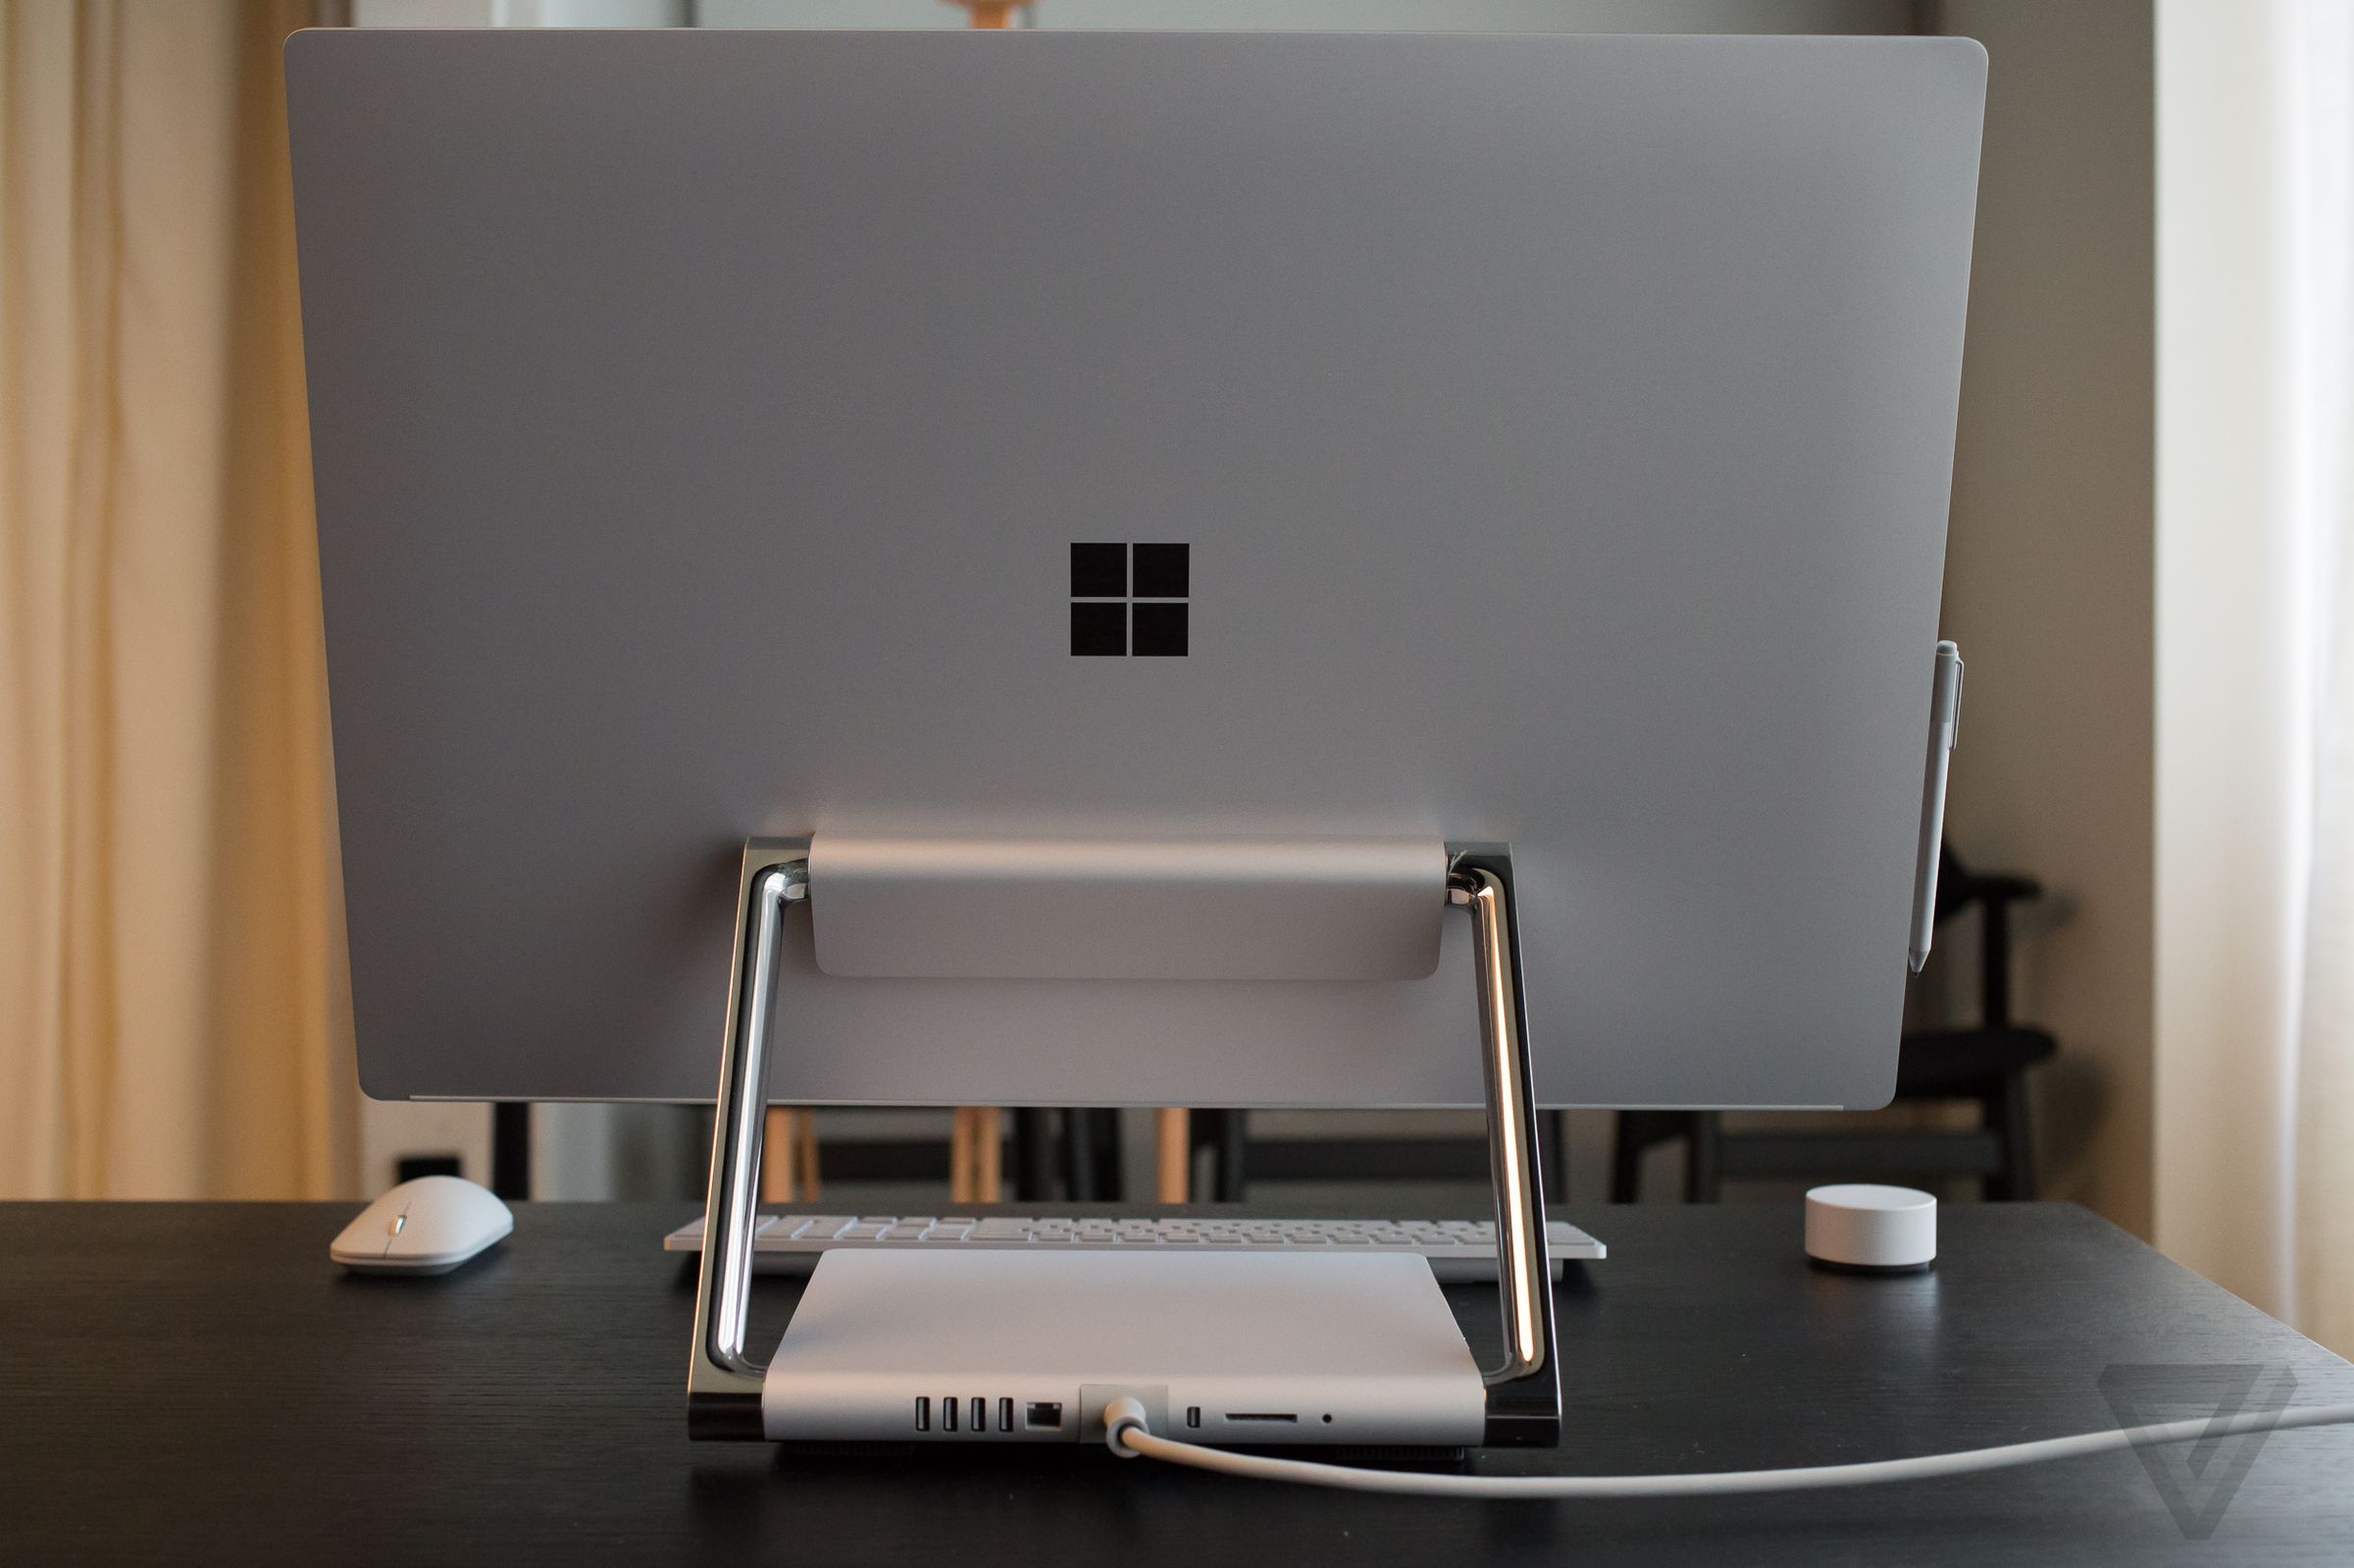 Surface Studio hinge photos